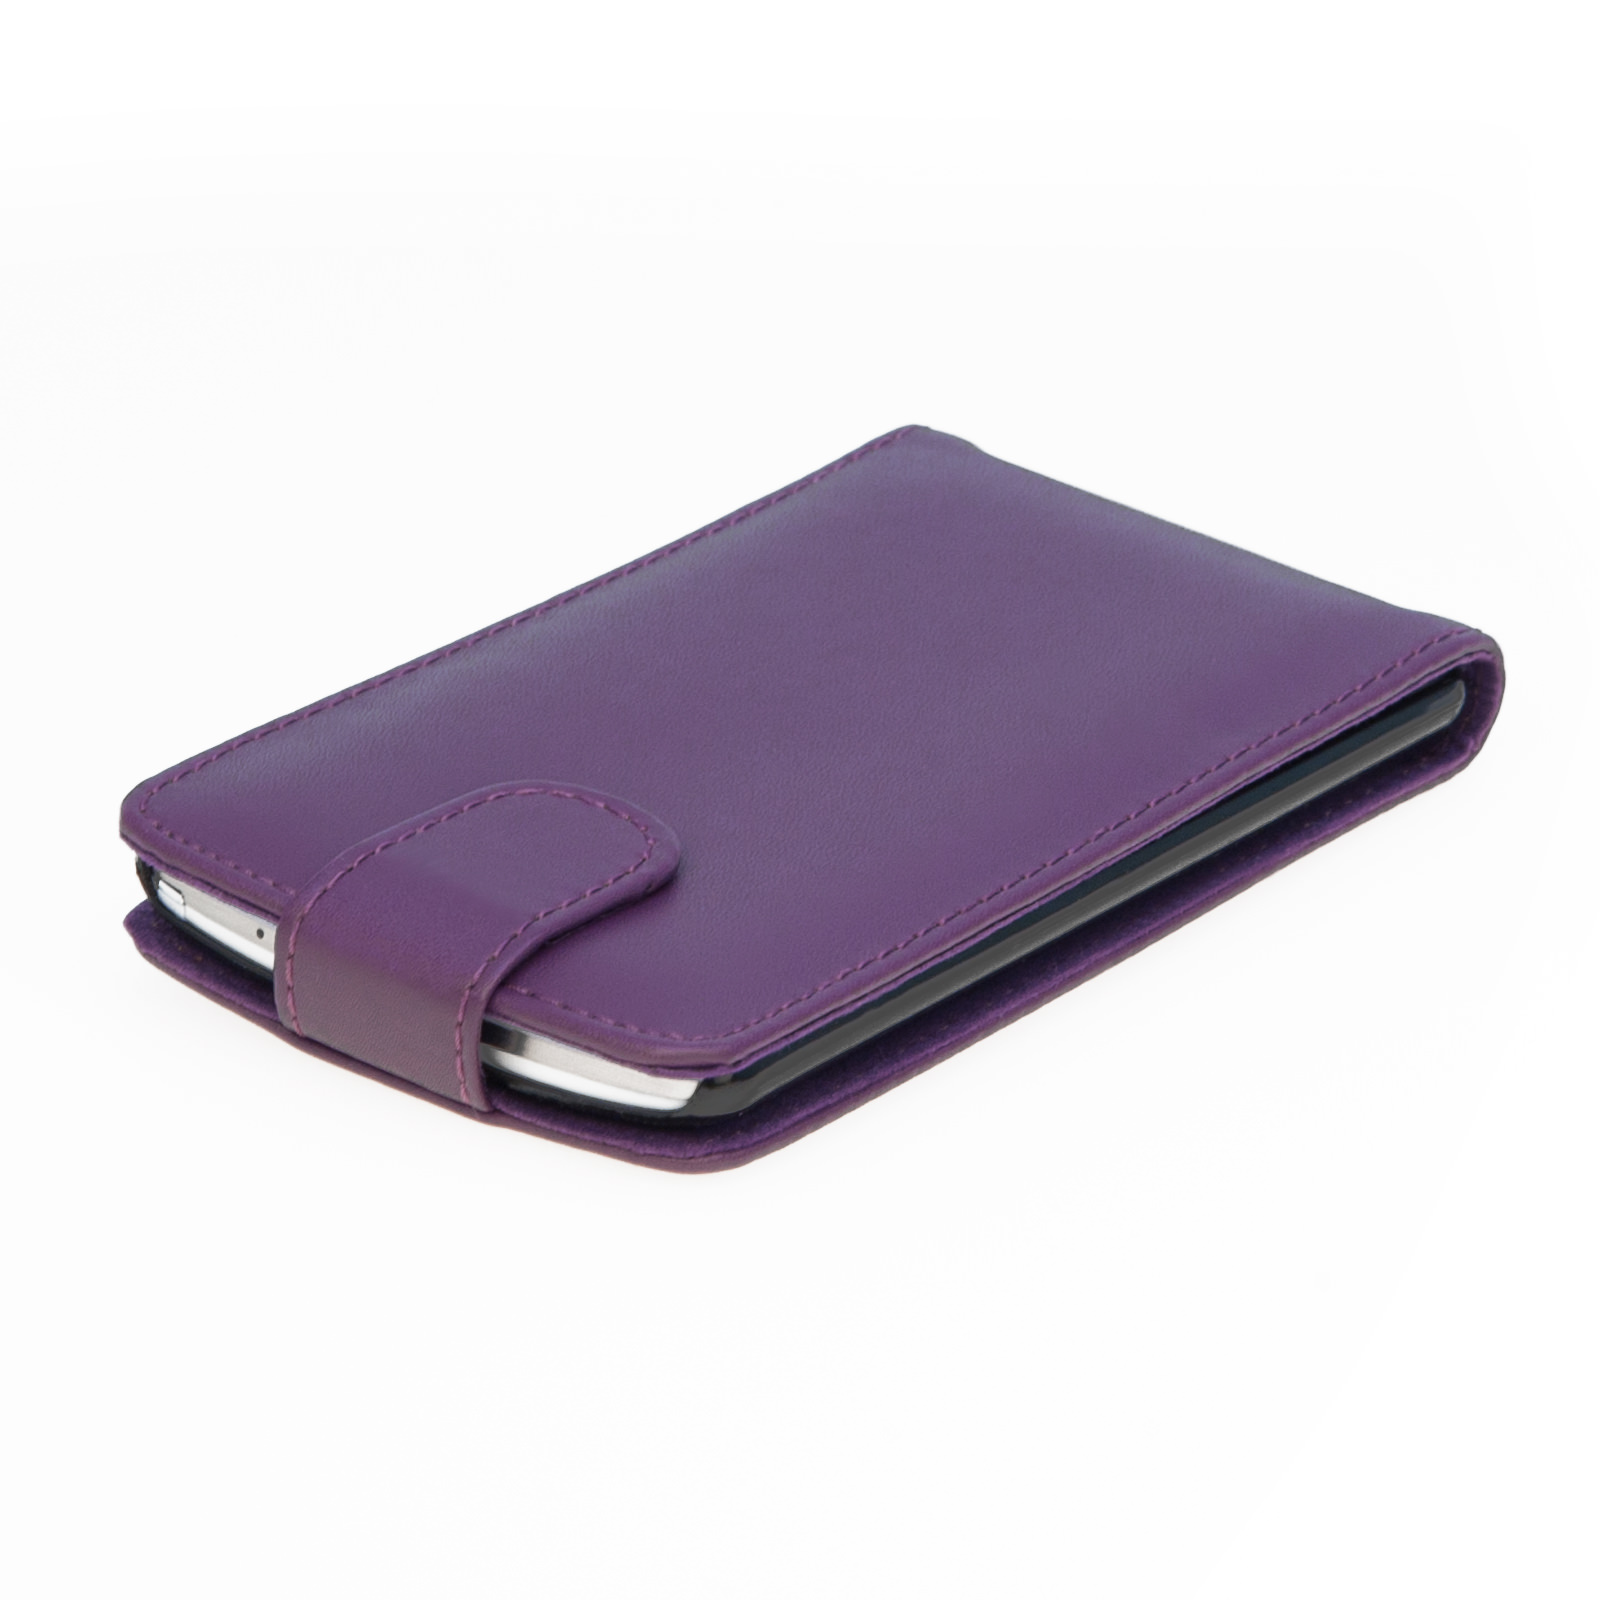 YouSave Accessories LG G3 Leather-Effect Flip Case - Purple